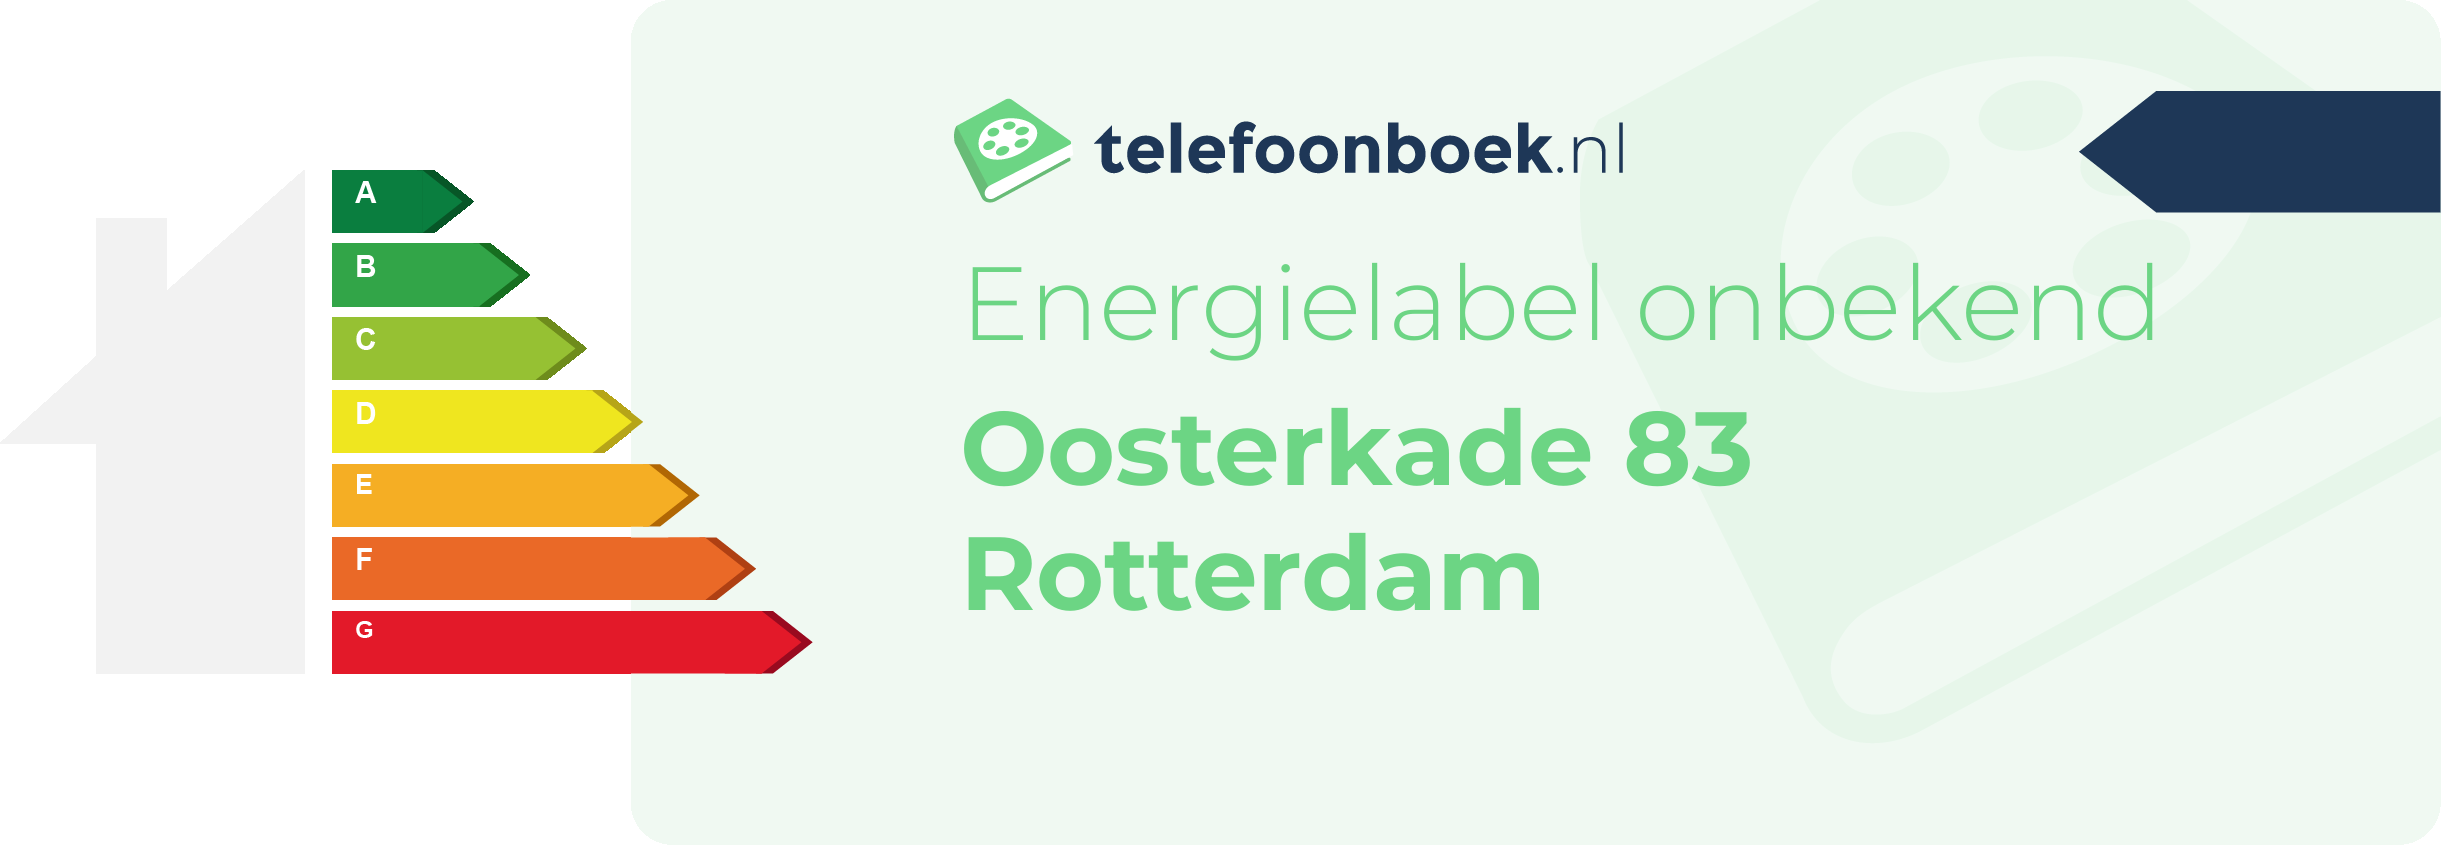 Energielabel Oosterkade 83 Rotterdam